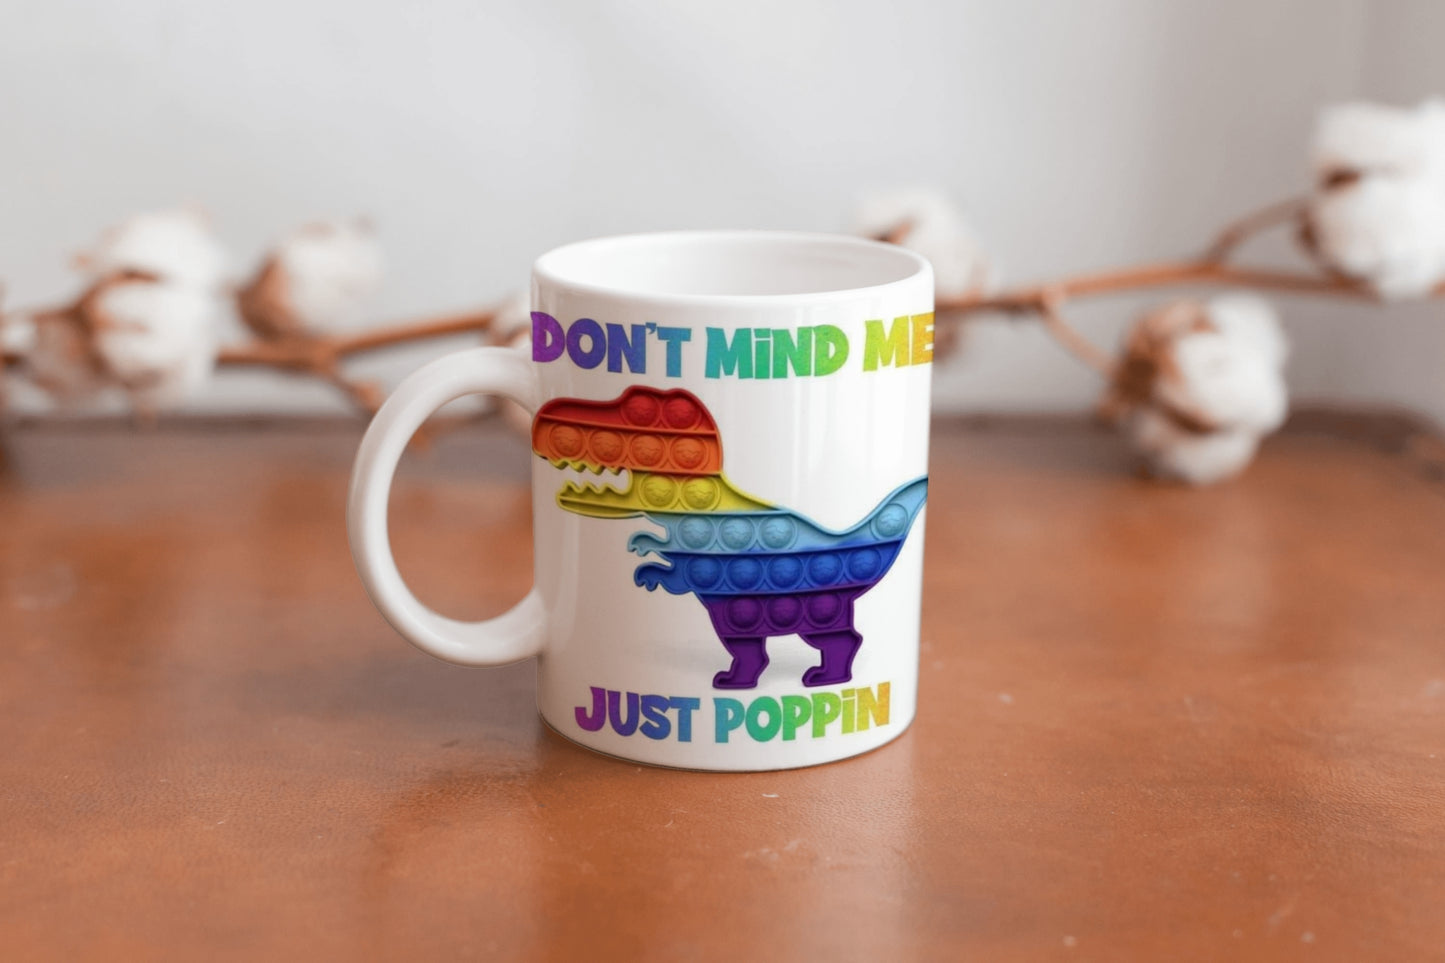 Pop It Mug's